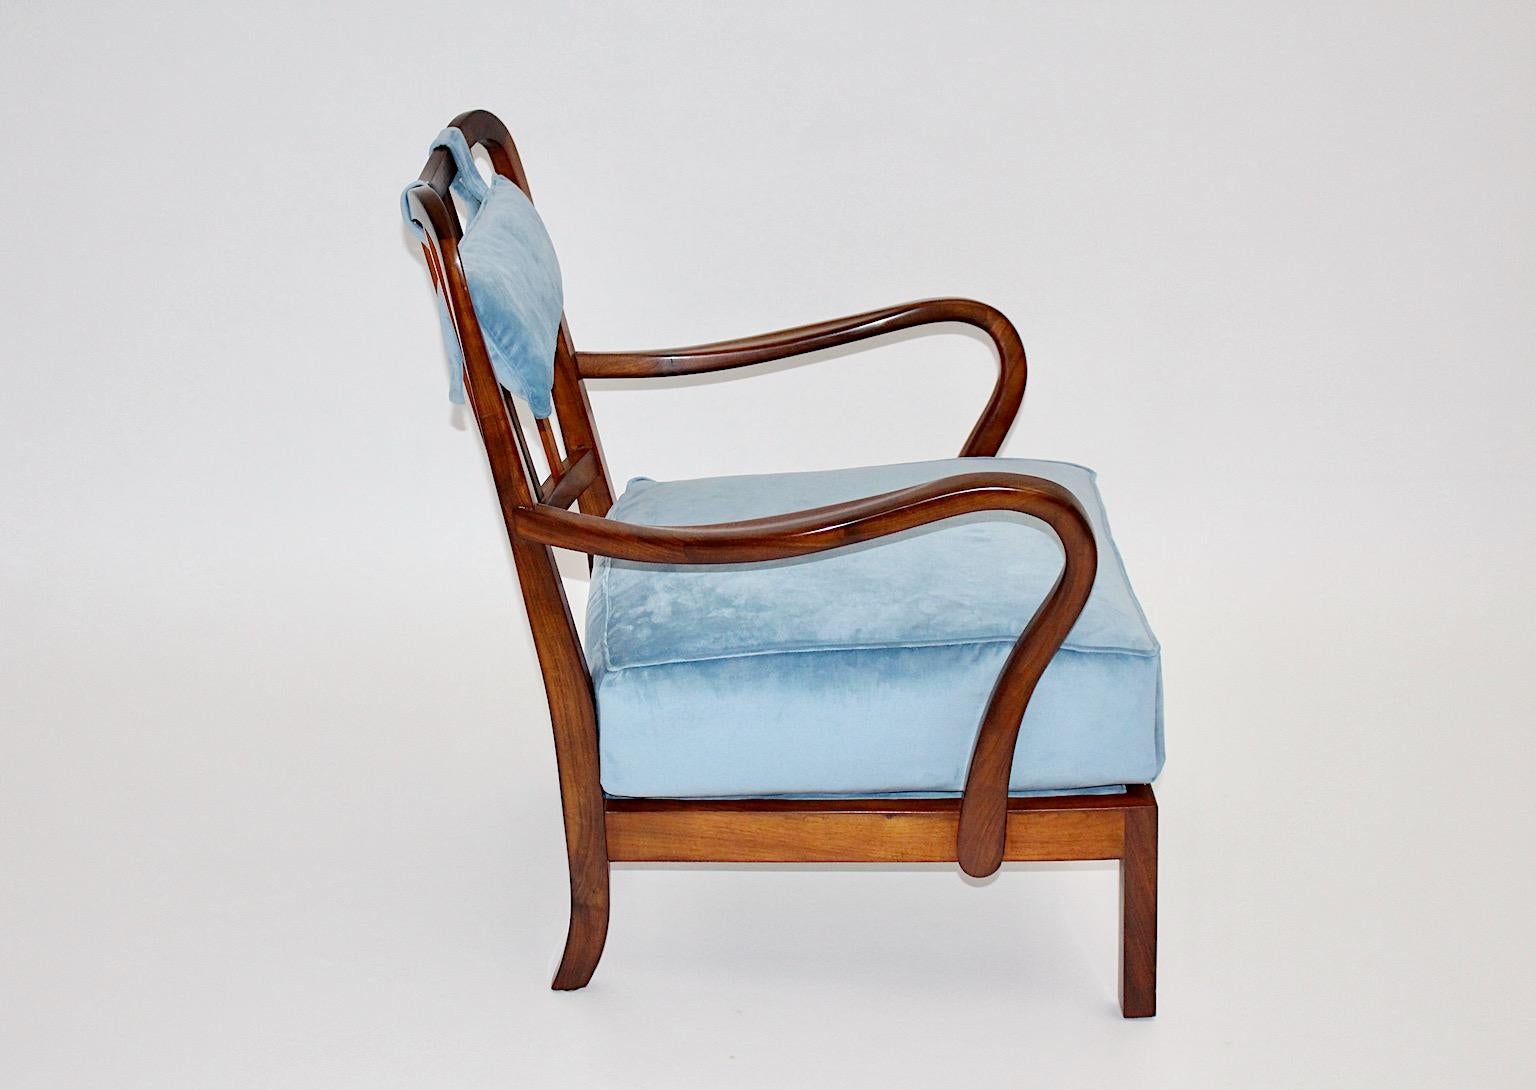 Art Deco Walnut Vintage Lounge Chair Armchair Attr. Oswald Haerdtl 1930s Vienna For Sale 6